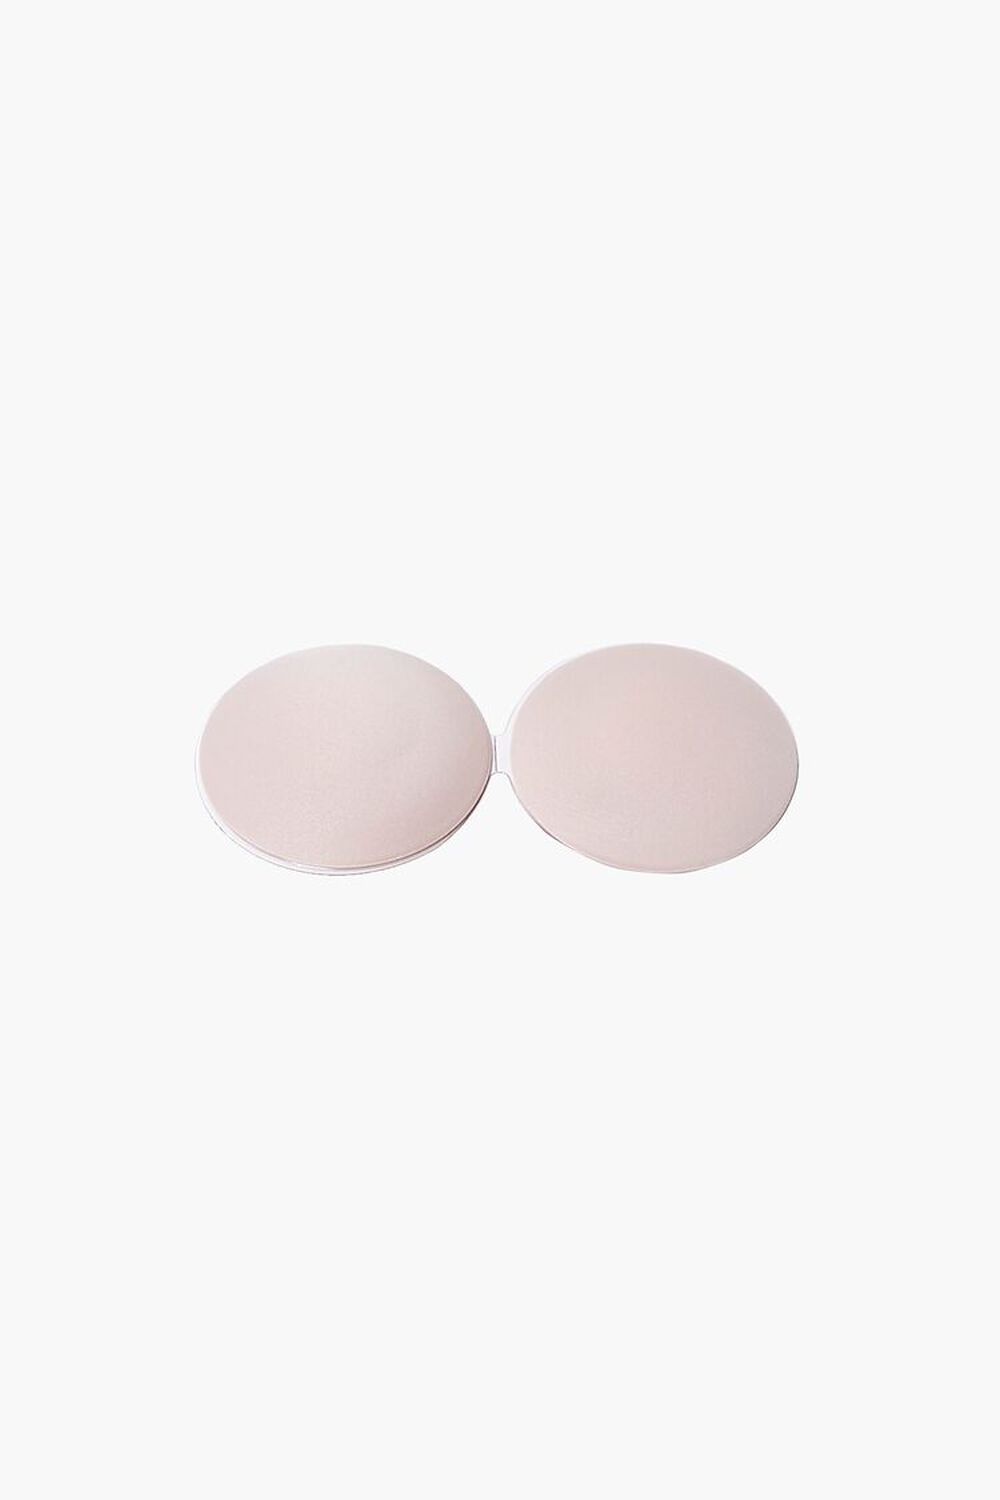 NUDE Adhesive Nipple Covers, image 1